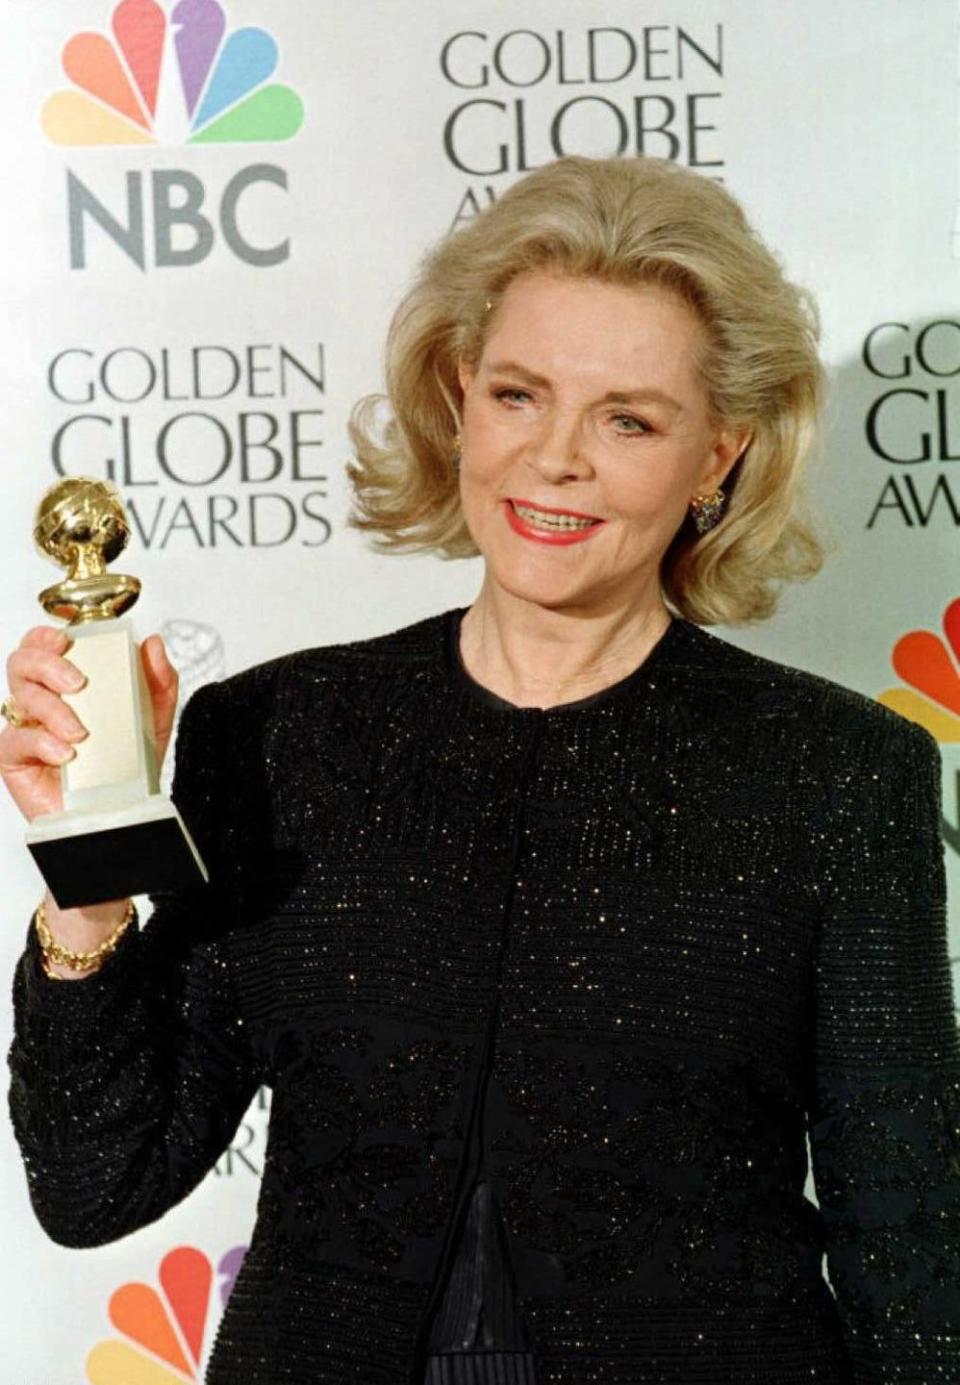 1996: A Golden Globe Win